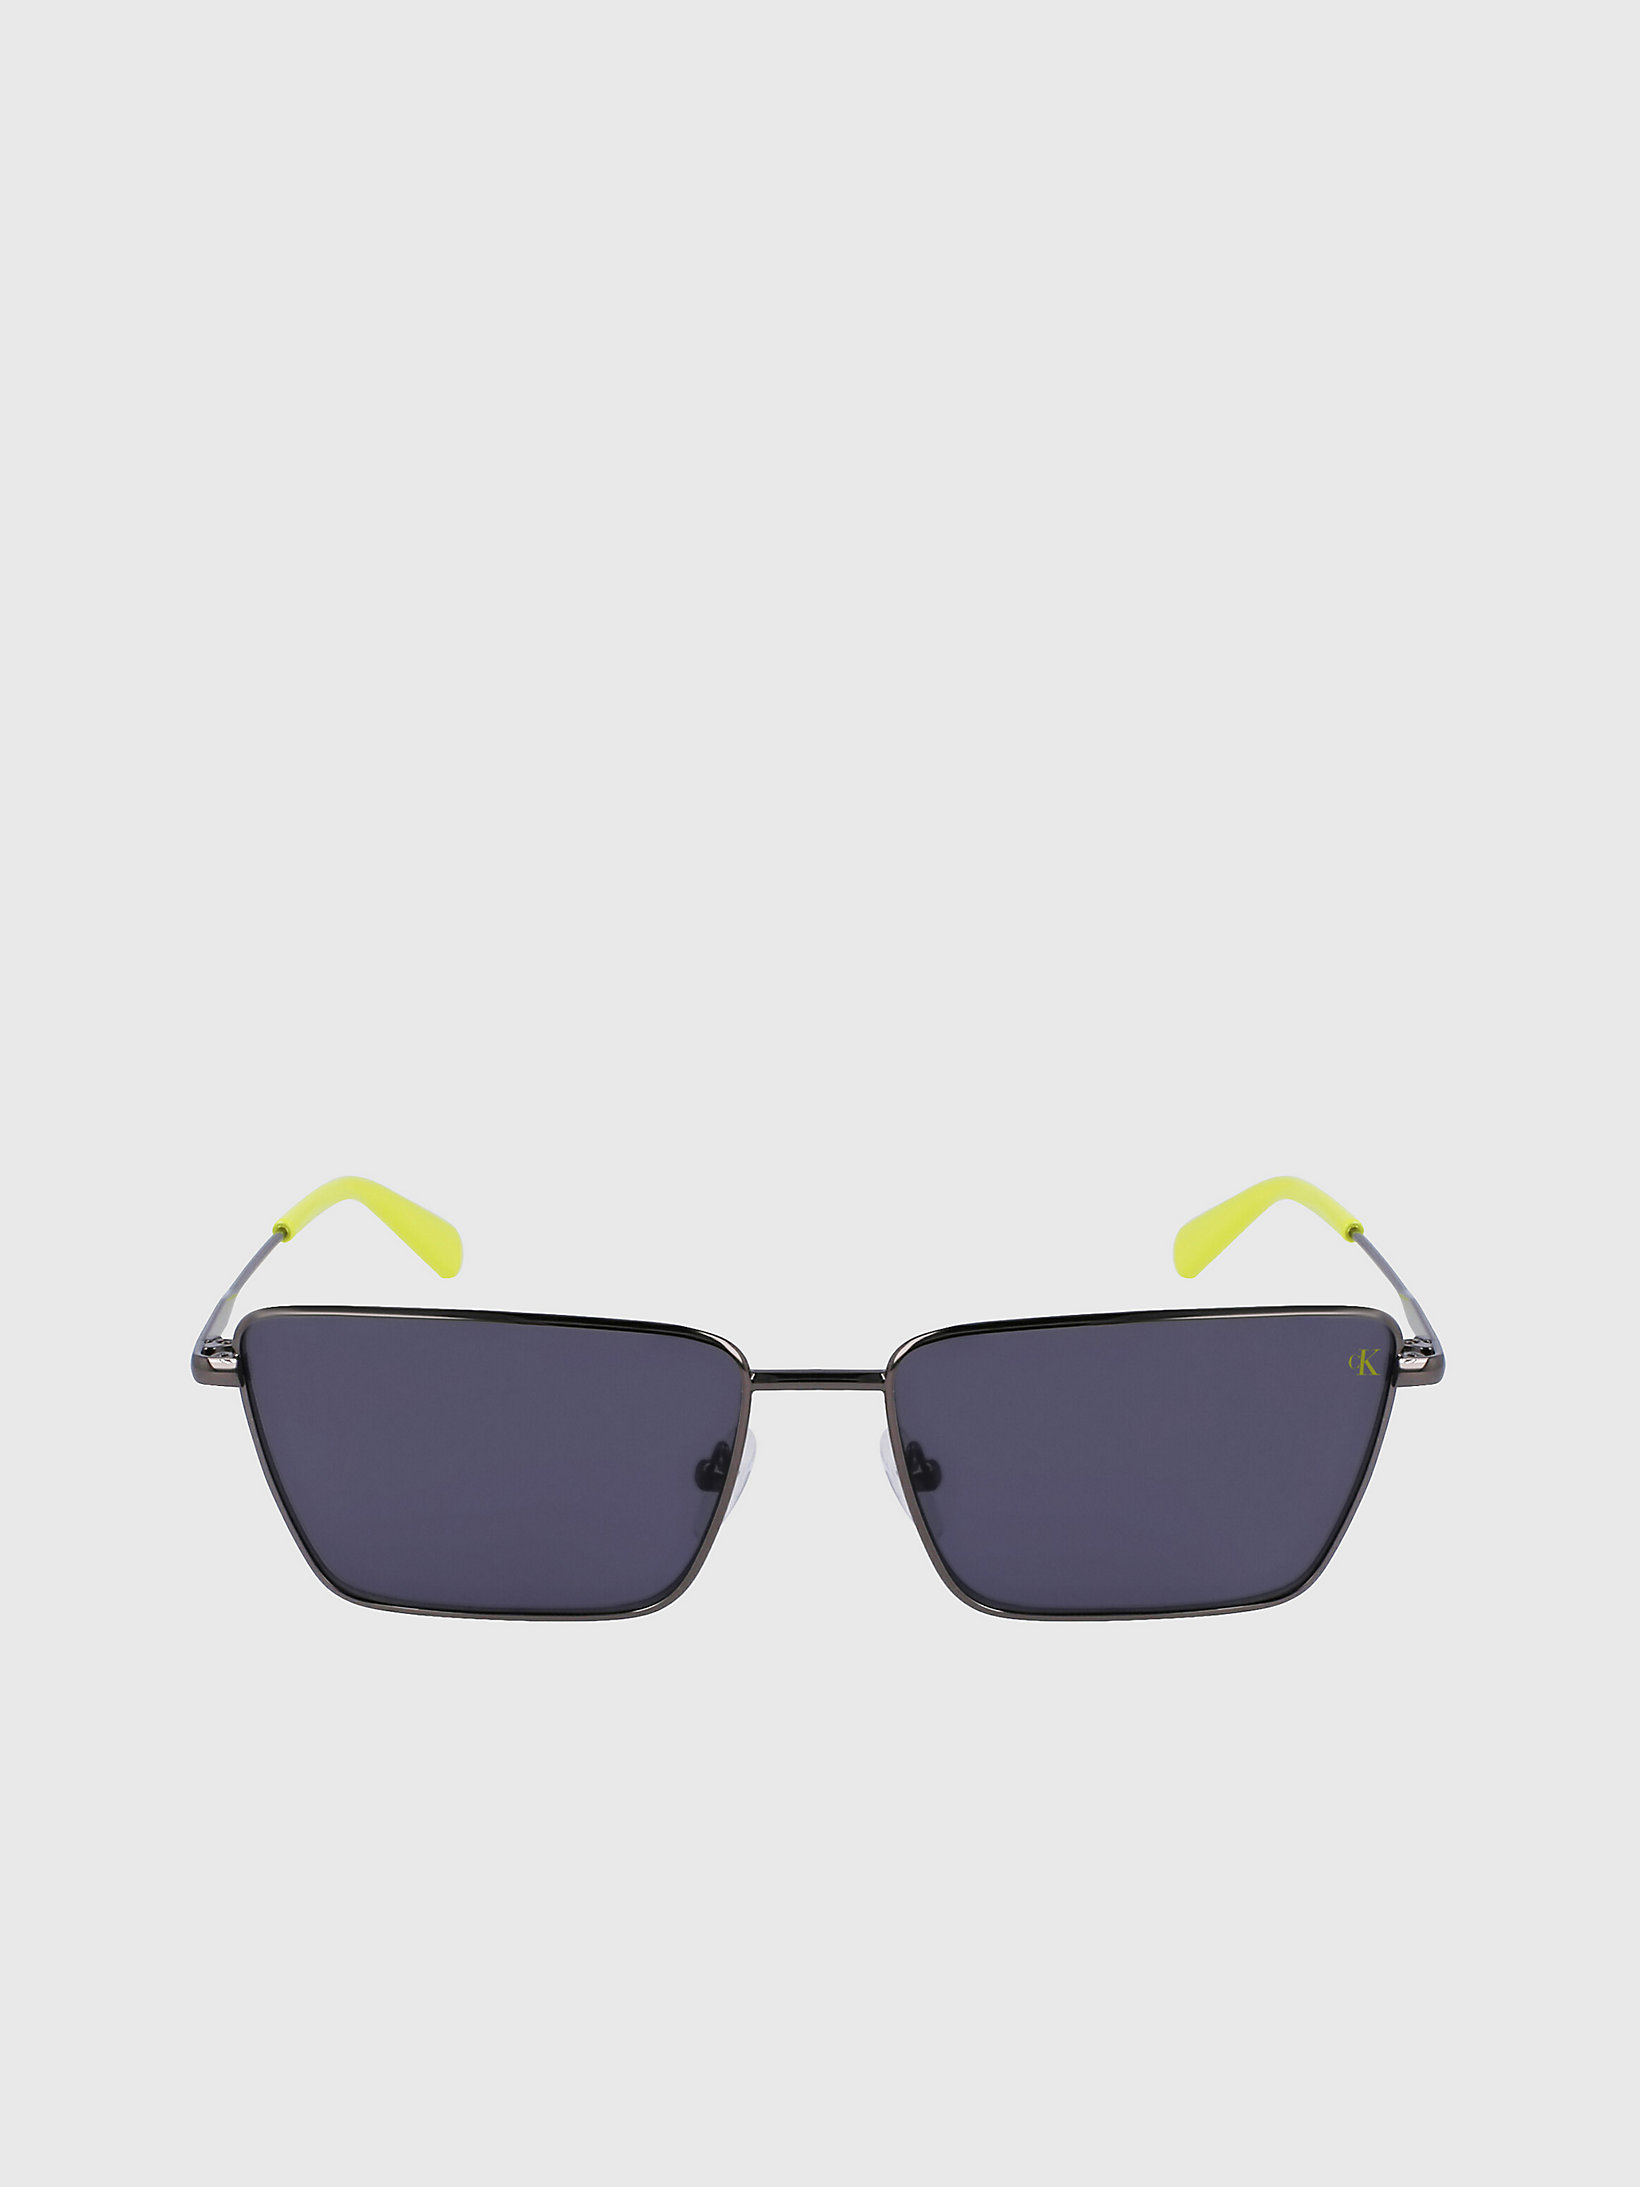 Dark Ruthenium/gray > Прямоугольные солнцезащитные очки Ckj22217s > undefined unisex - Calvin Klein